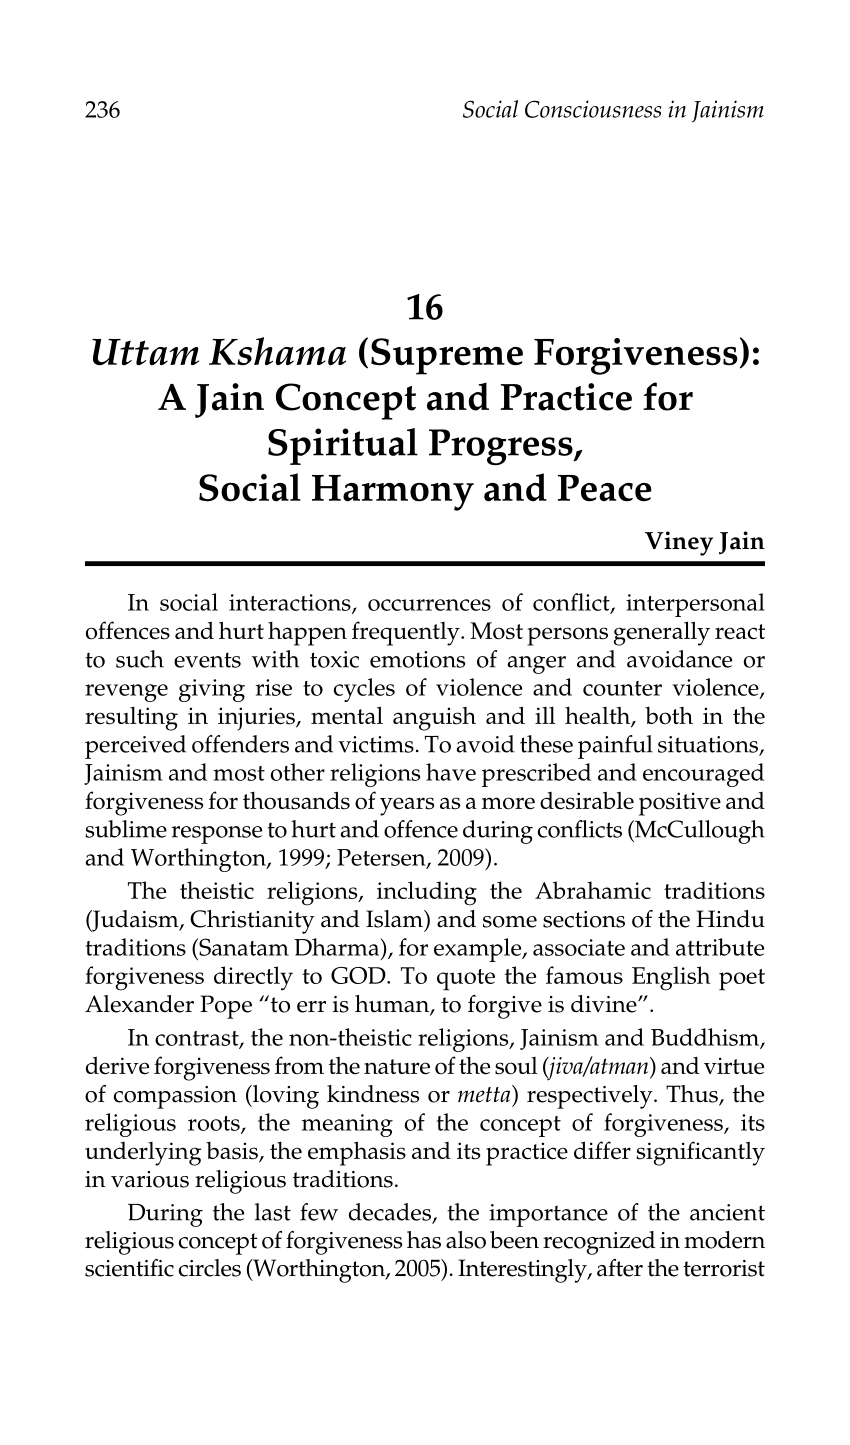 PDF) Uttam Kshama (Supreme Forgiveness): A Jain Concept and ...